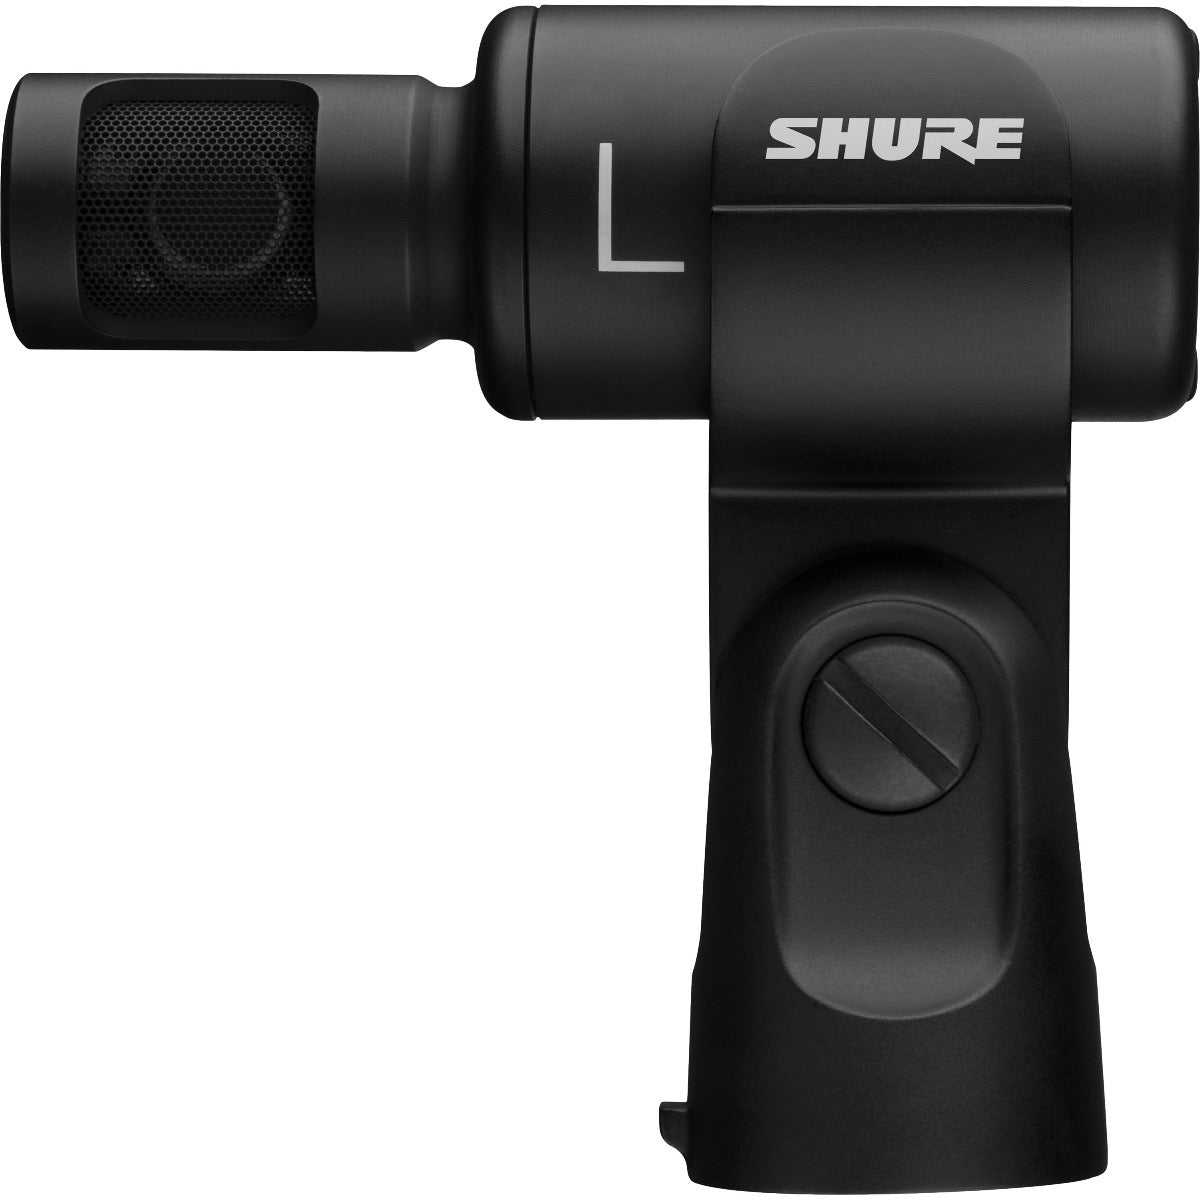 Shure MV88+ Stereo USB Condenser Microphone View 6